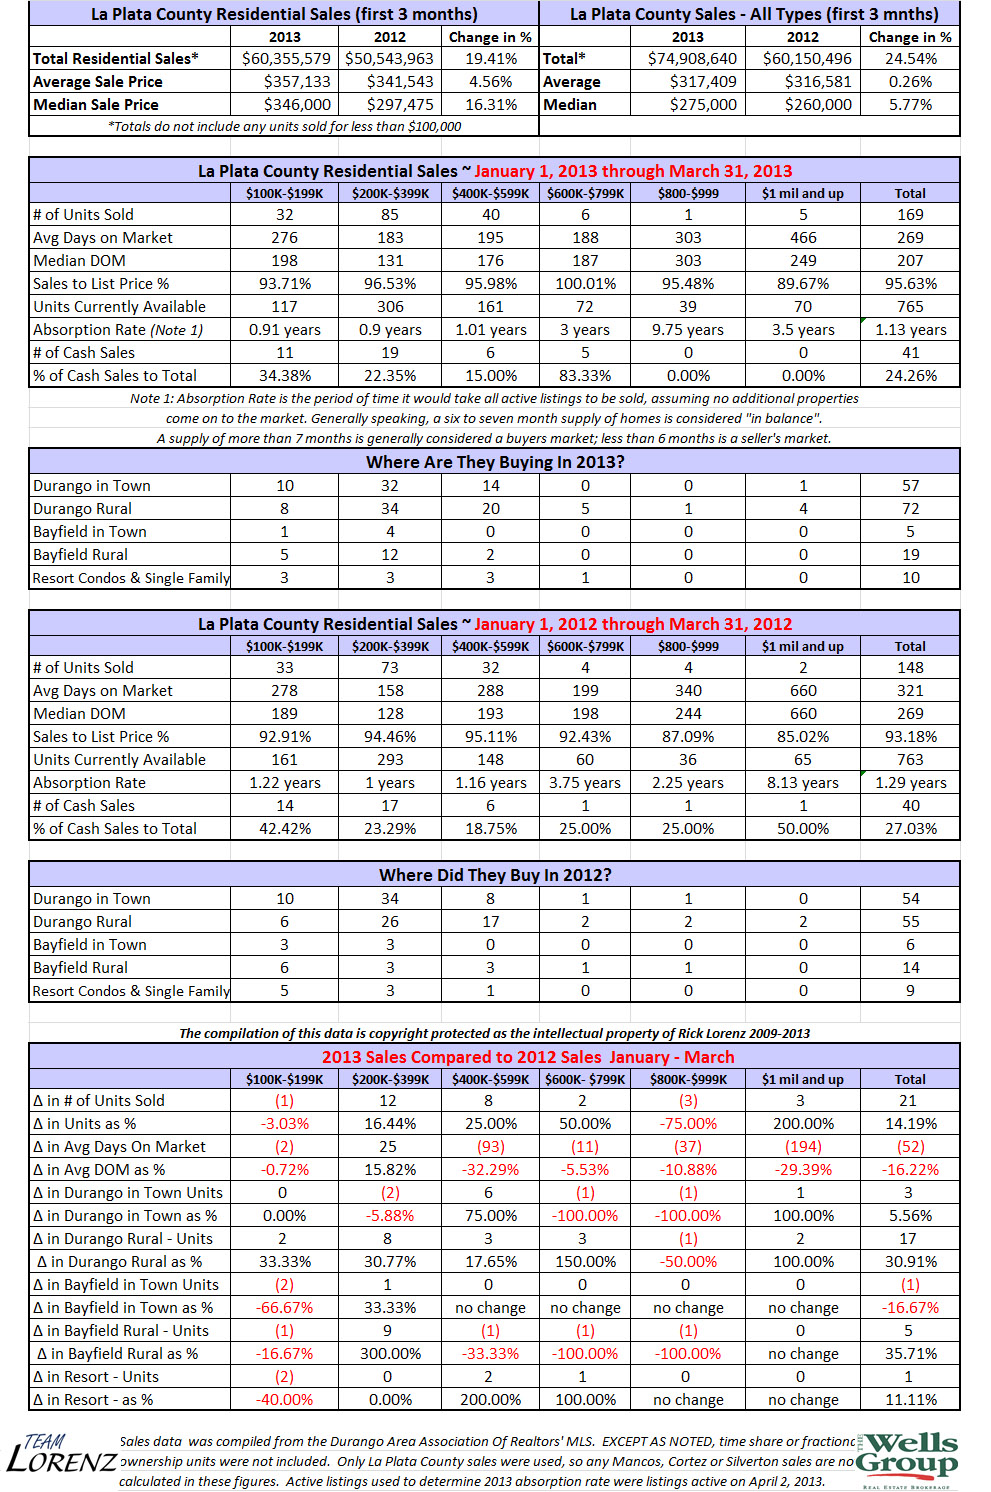 Durango Real Estate Comparative Statistics 2012-2013 First 3 Months